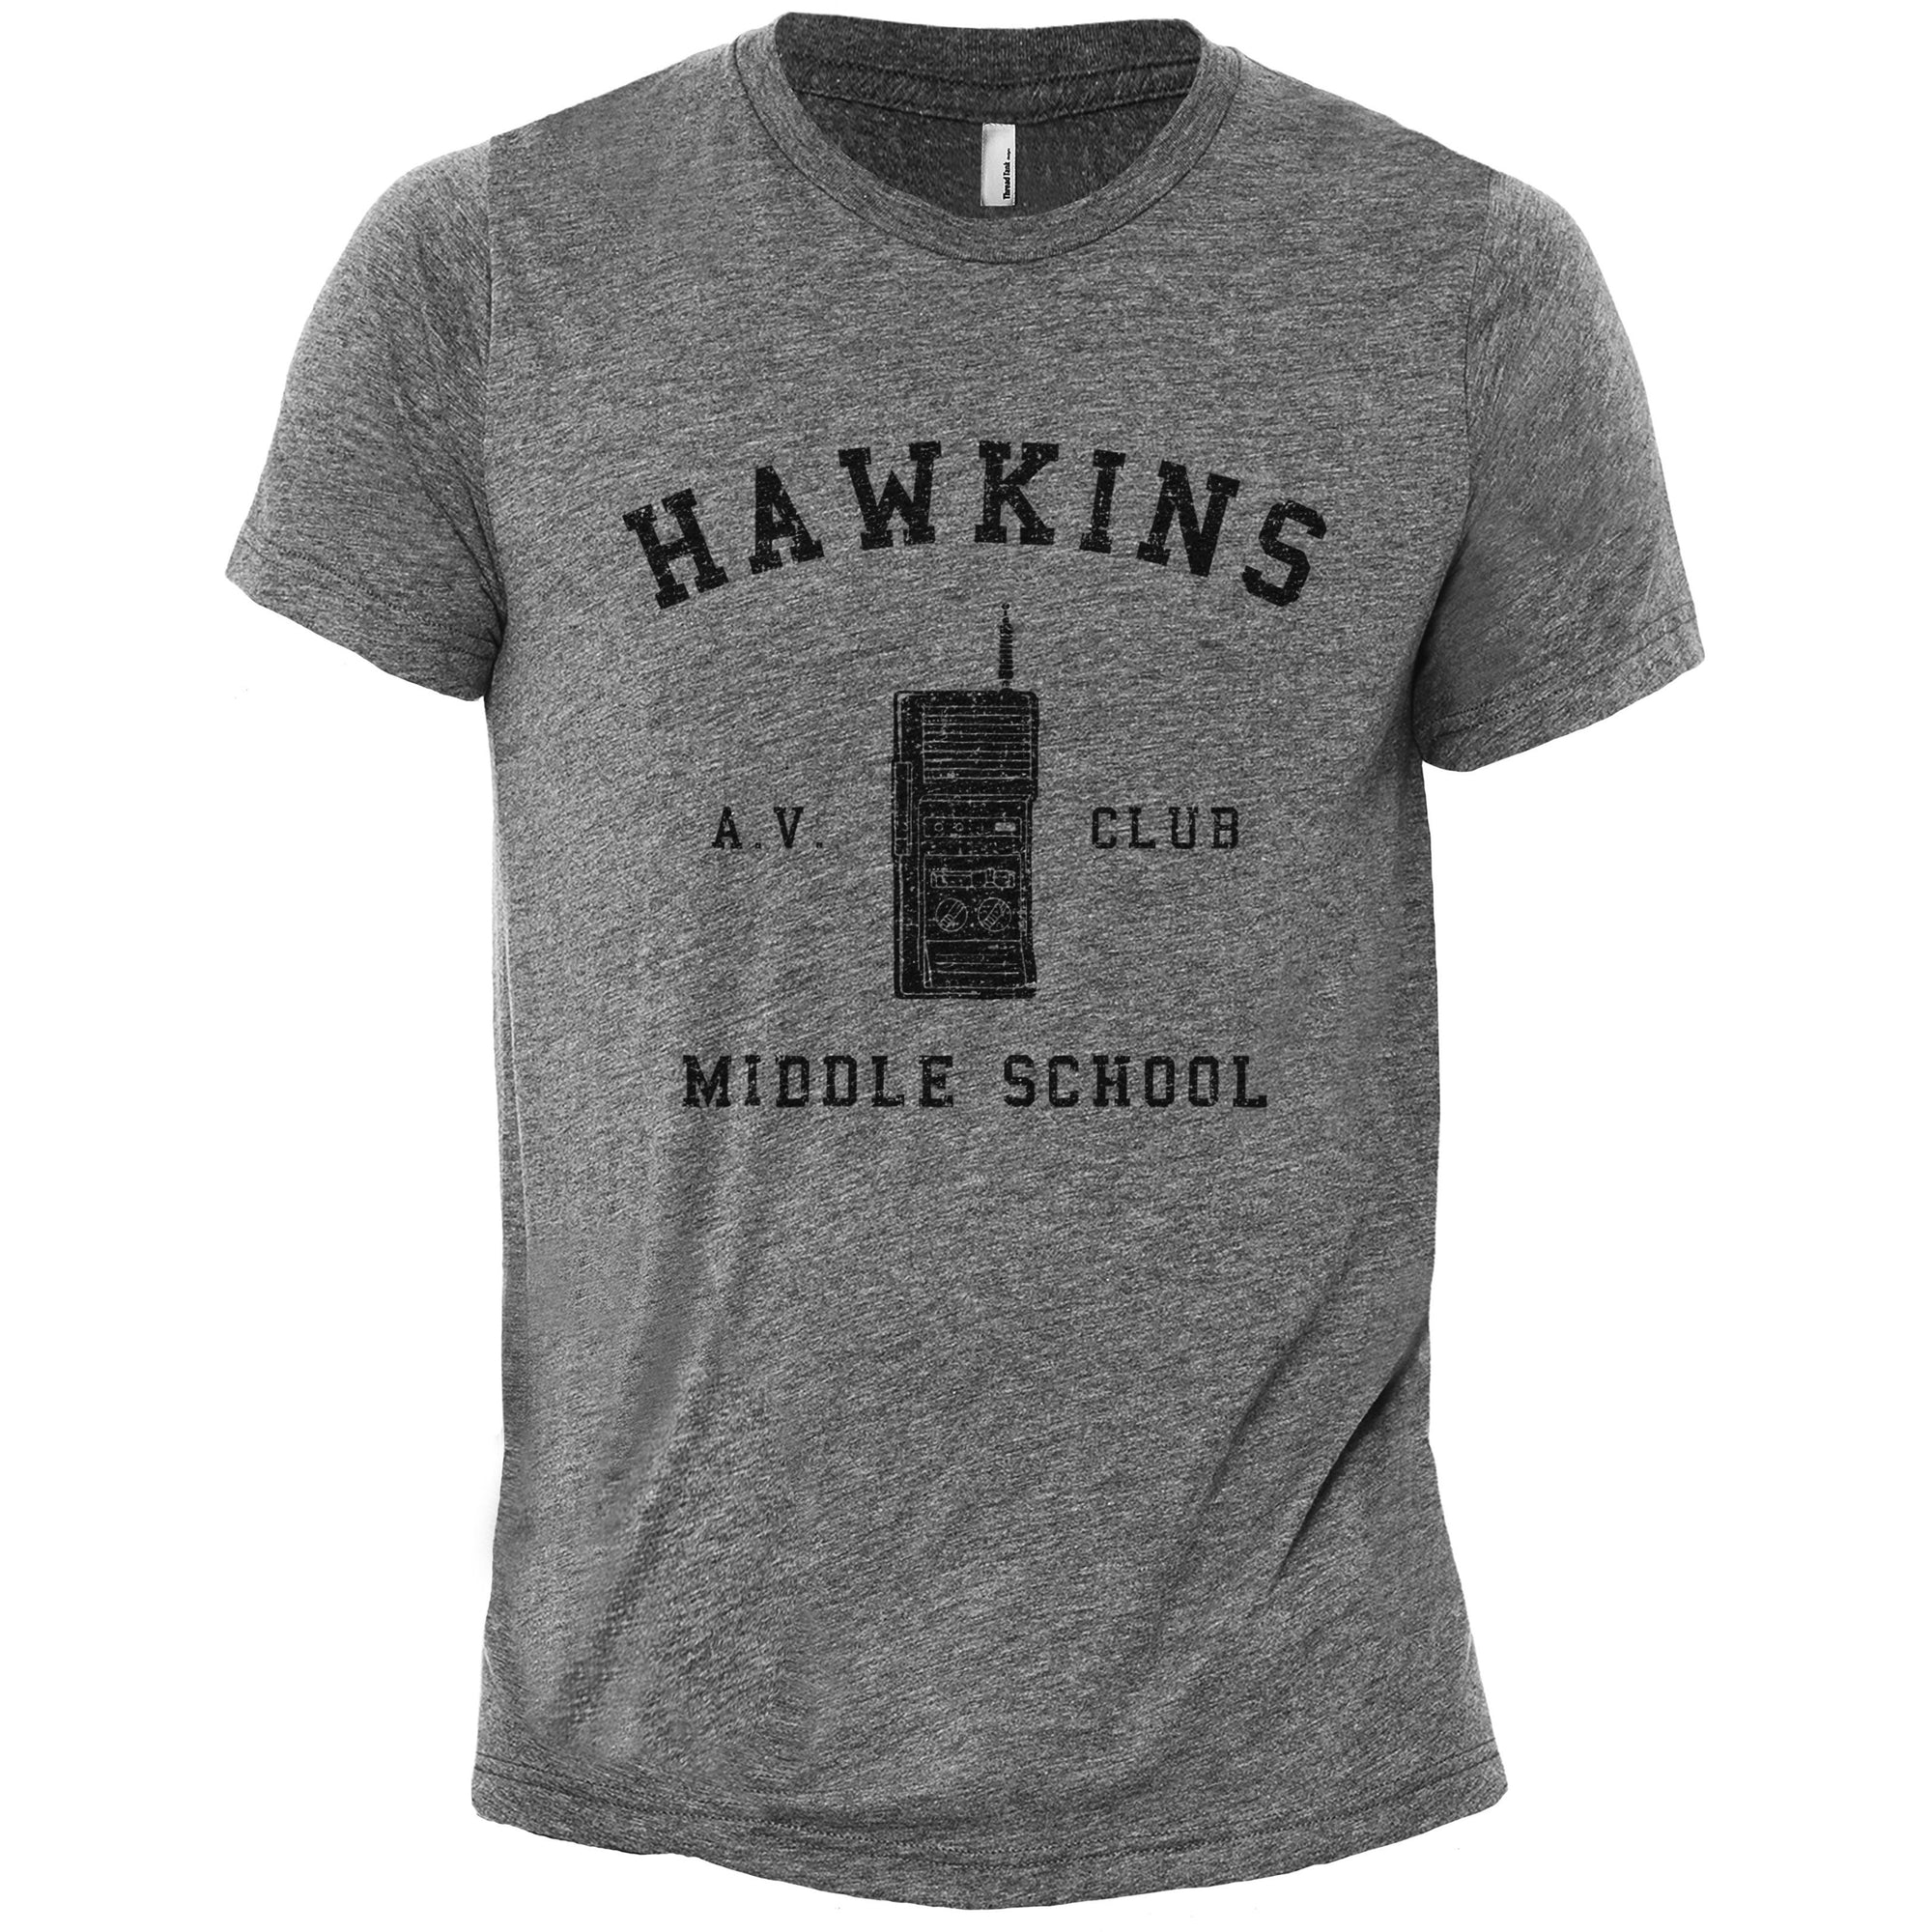 Hawkins Middle School Printed Graphic Men's Crew T-Shirt Grey Main Image